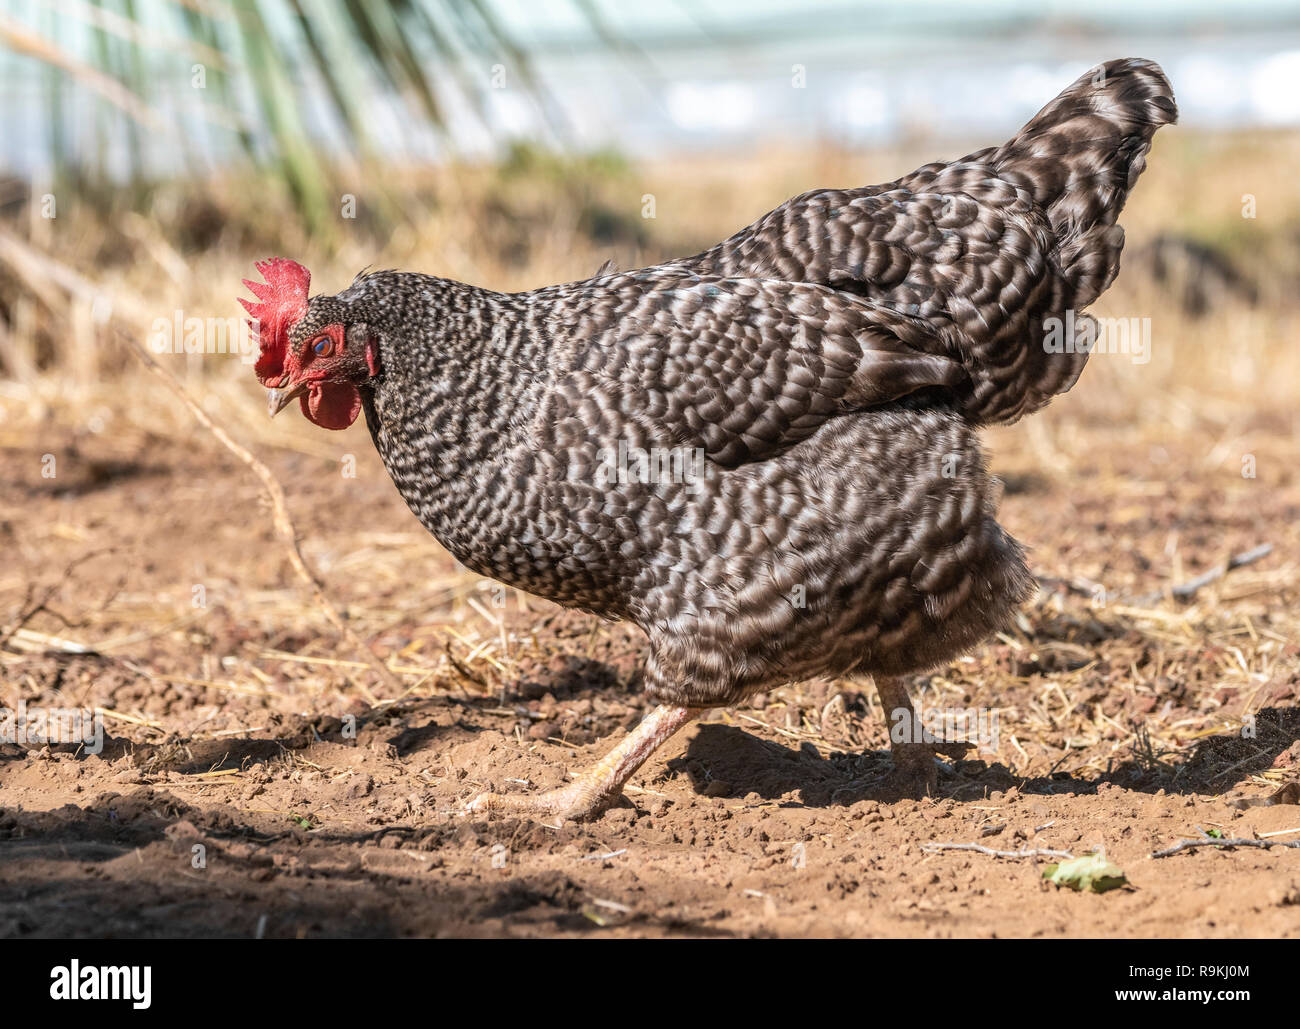 Free ranging Barred Rock hen chicken in yard Stock Photo